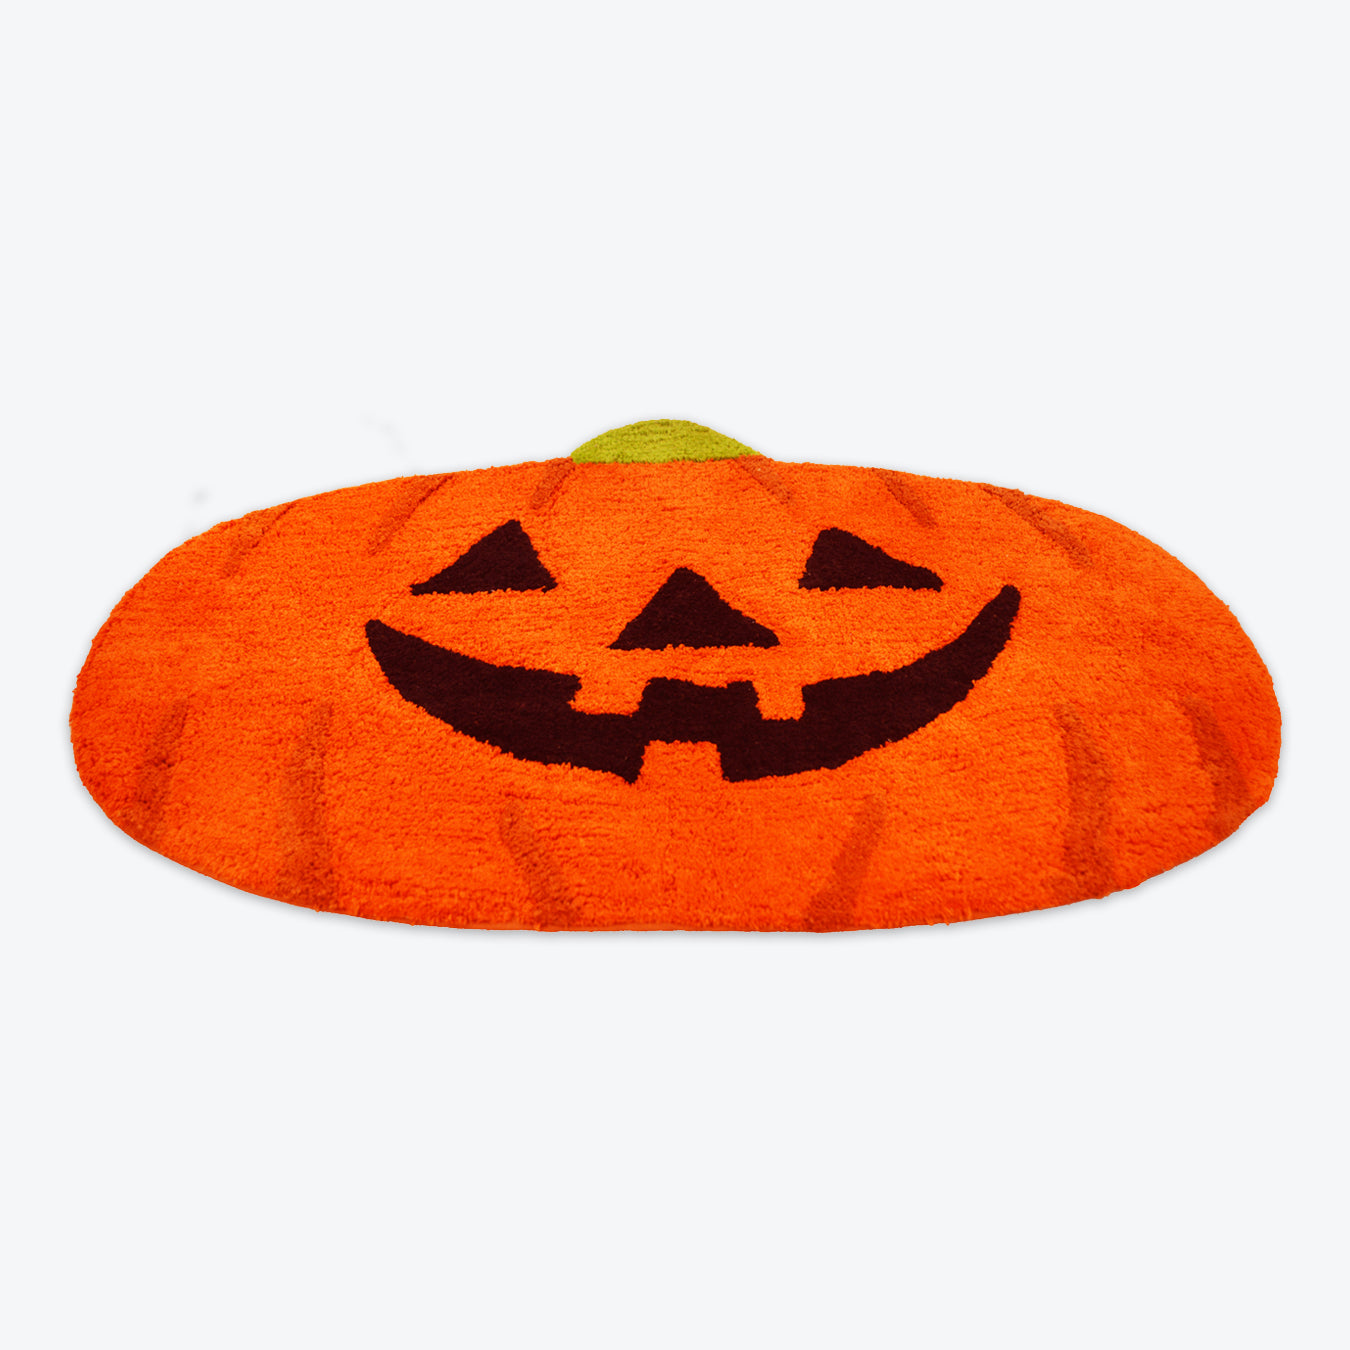 Pumpkin Rug - Fun Halloween Decor for the bathroom